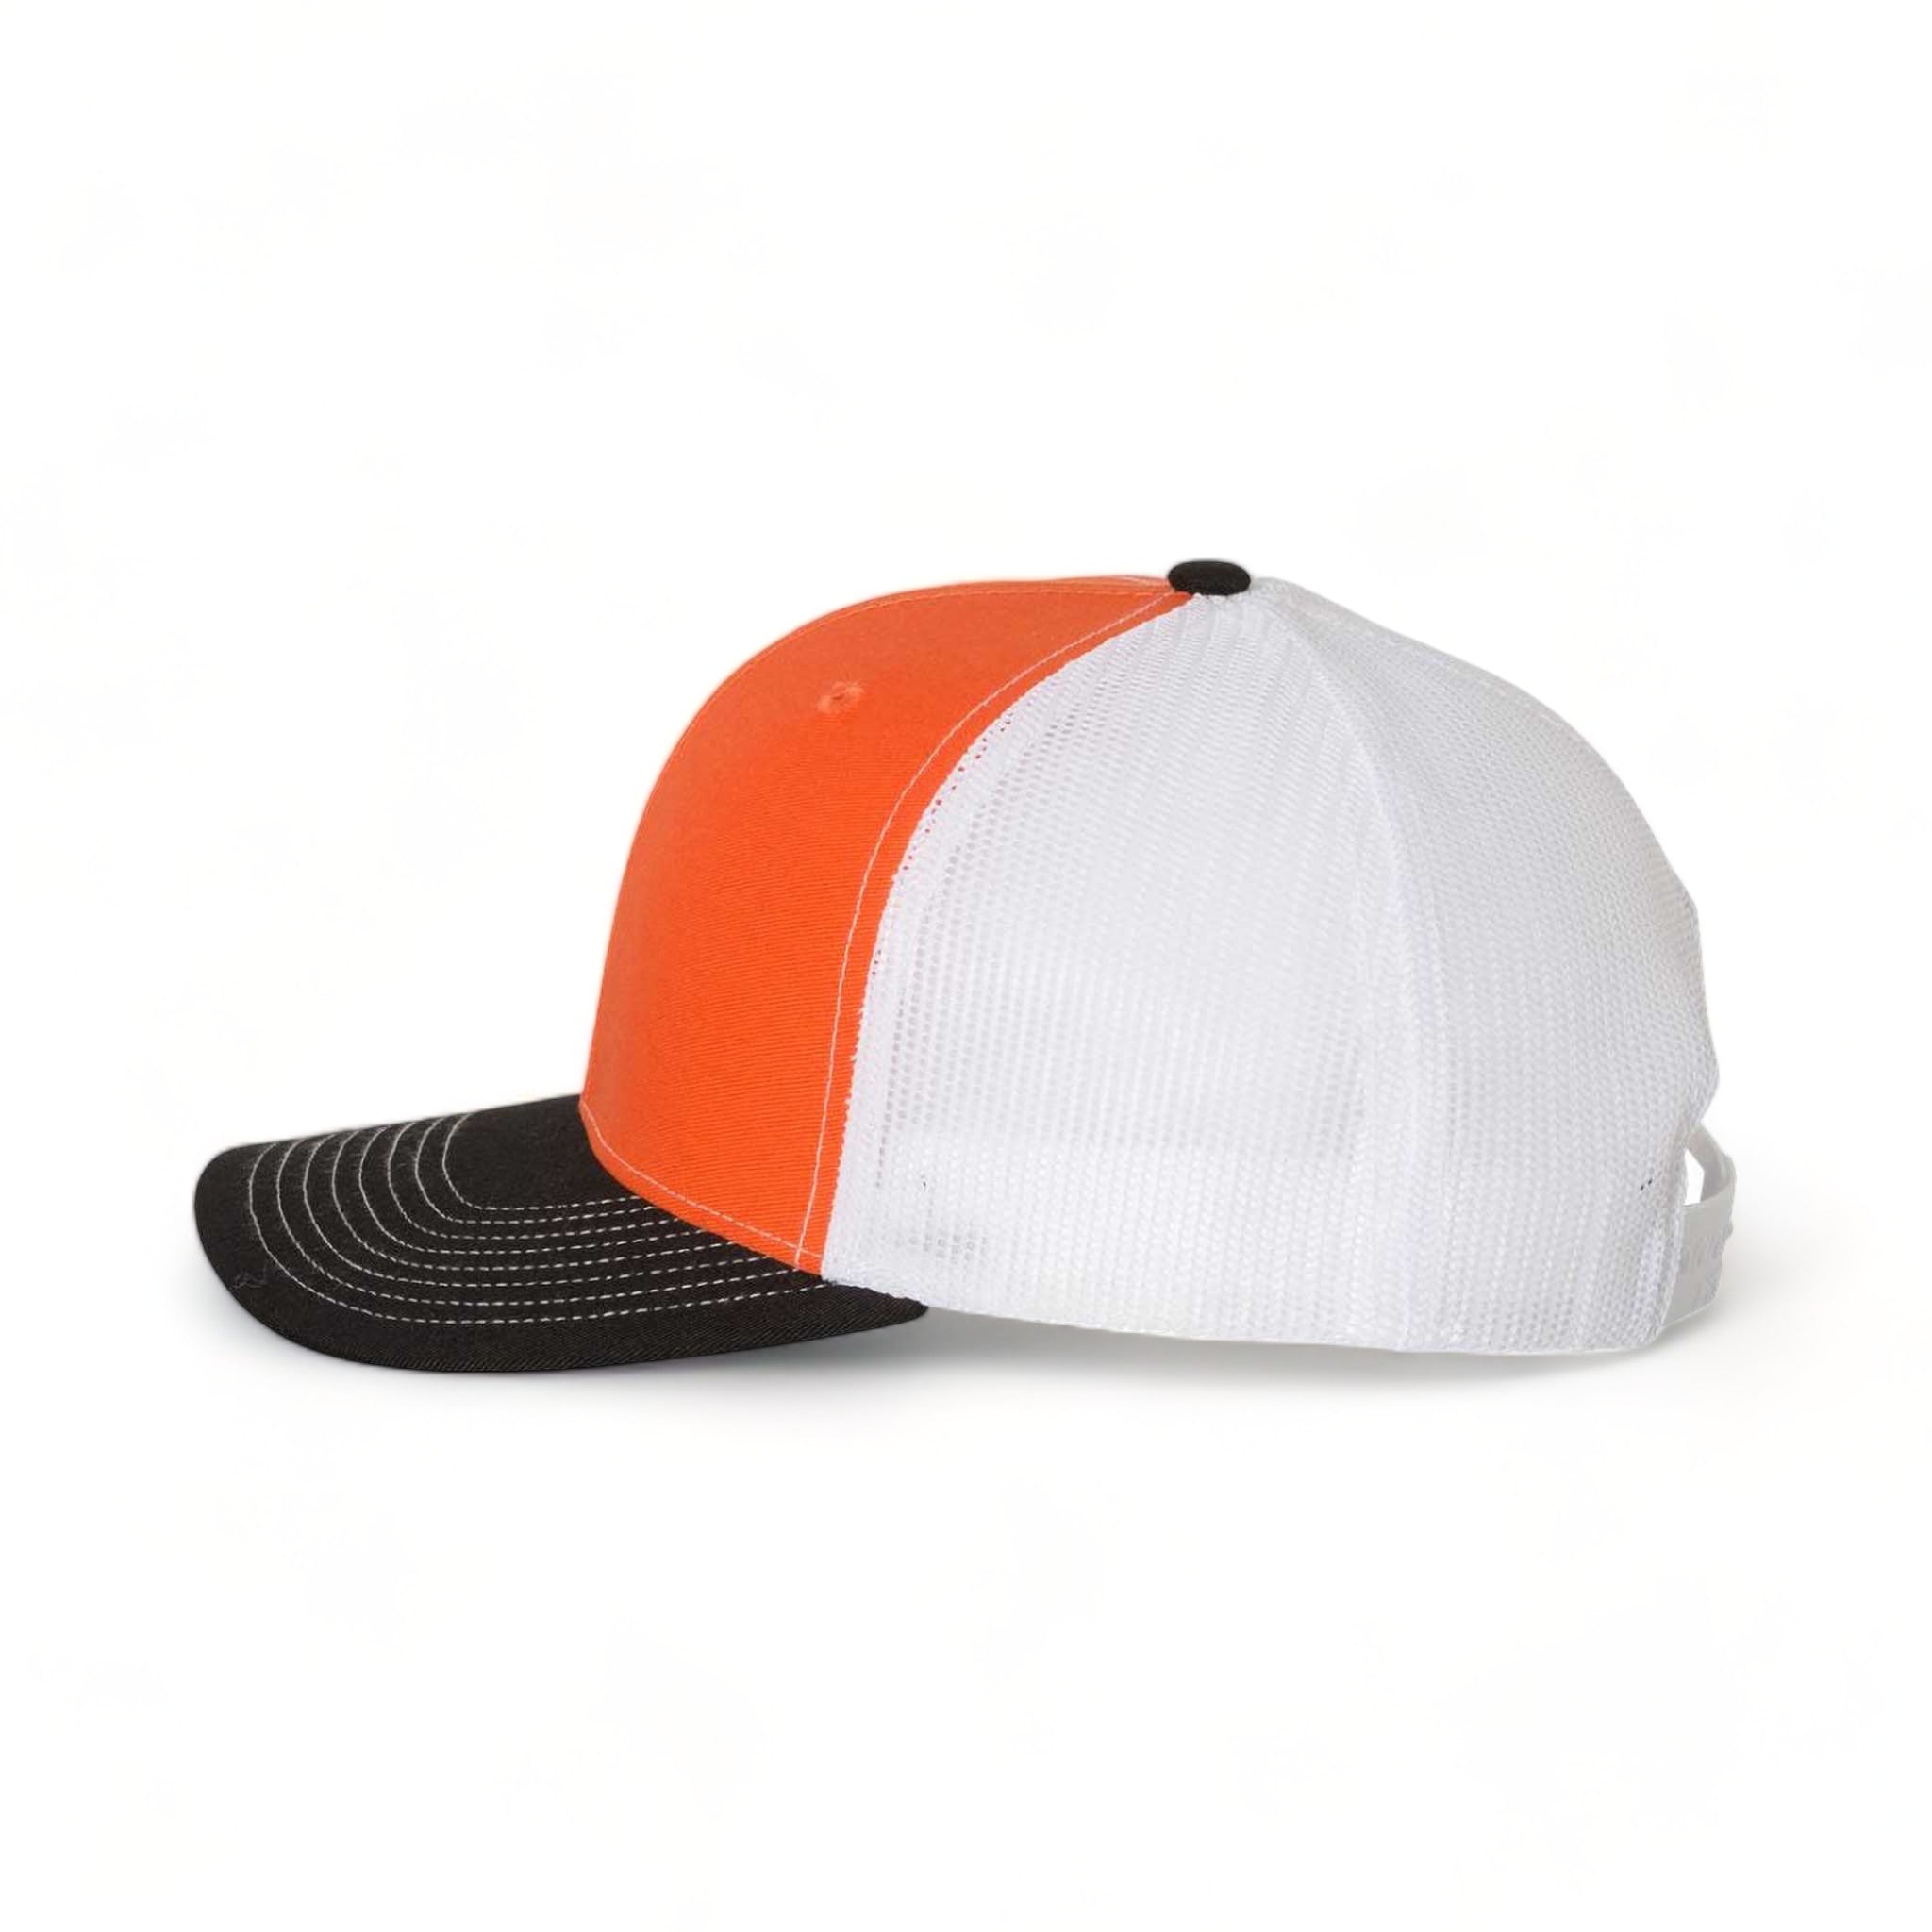 Side view of Richardson 112 custom hat in orange, white and black